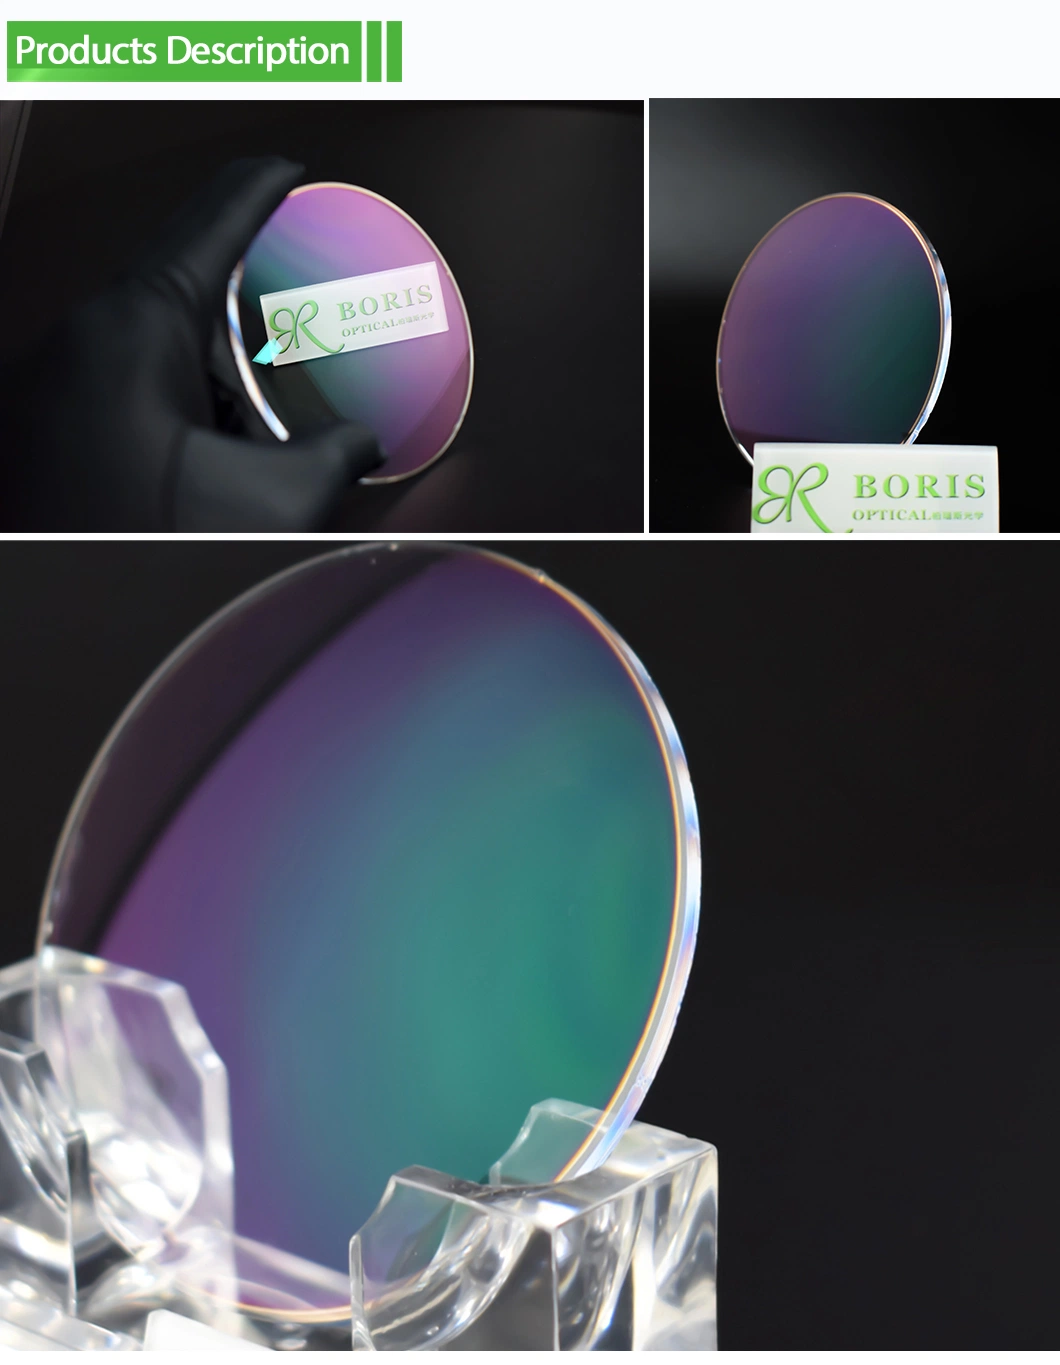 1.71 Asp UV400 Single Vision Hmc EMI Optical Lenses China Eyeglasses